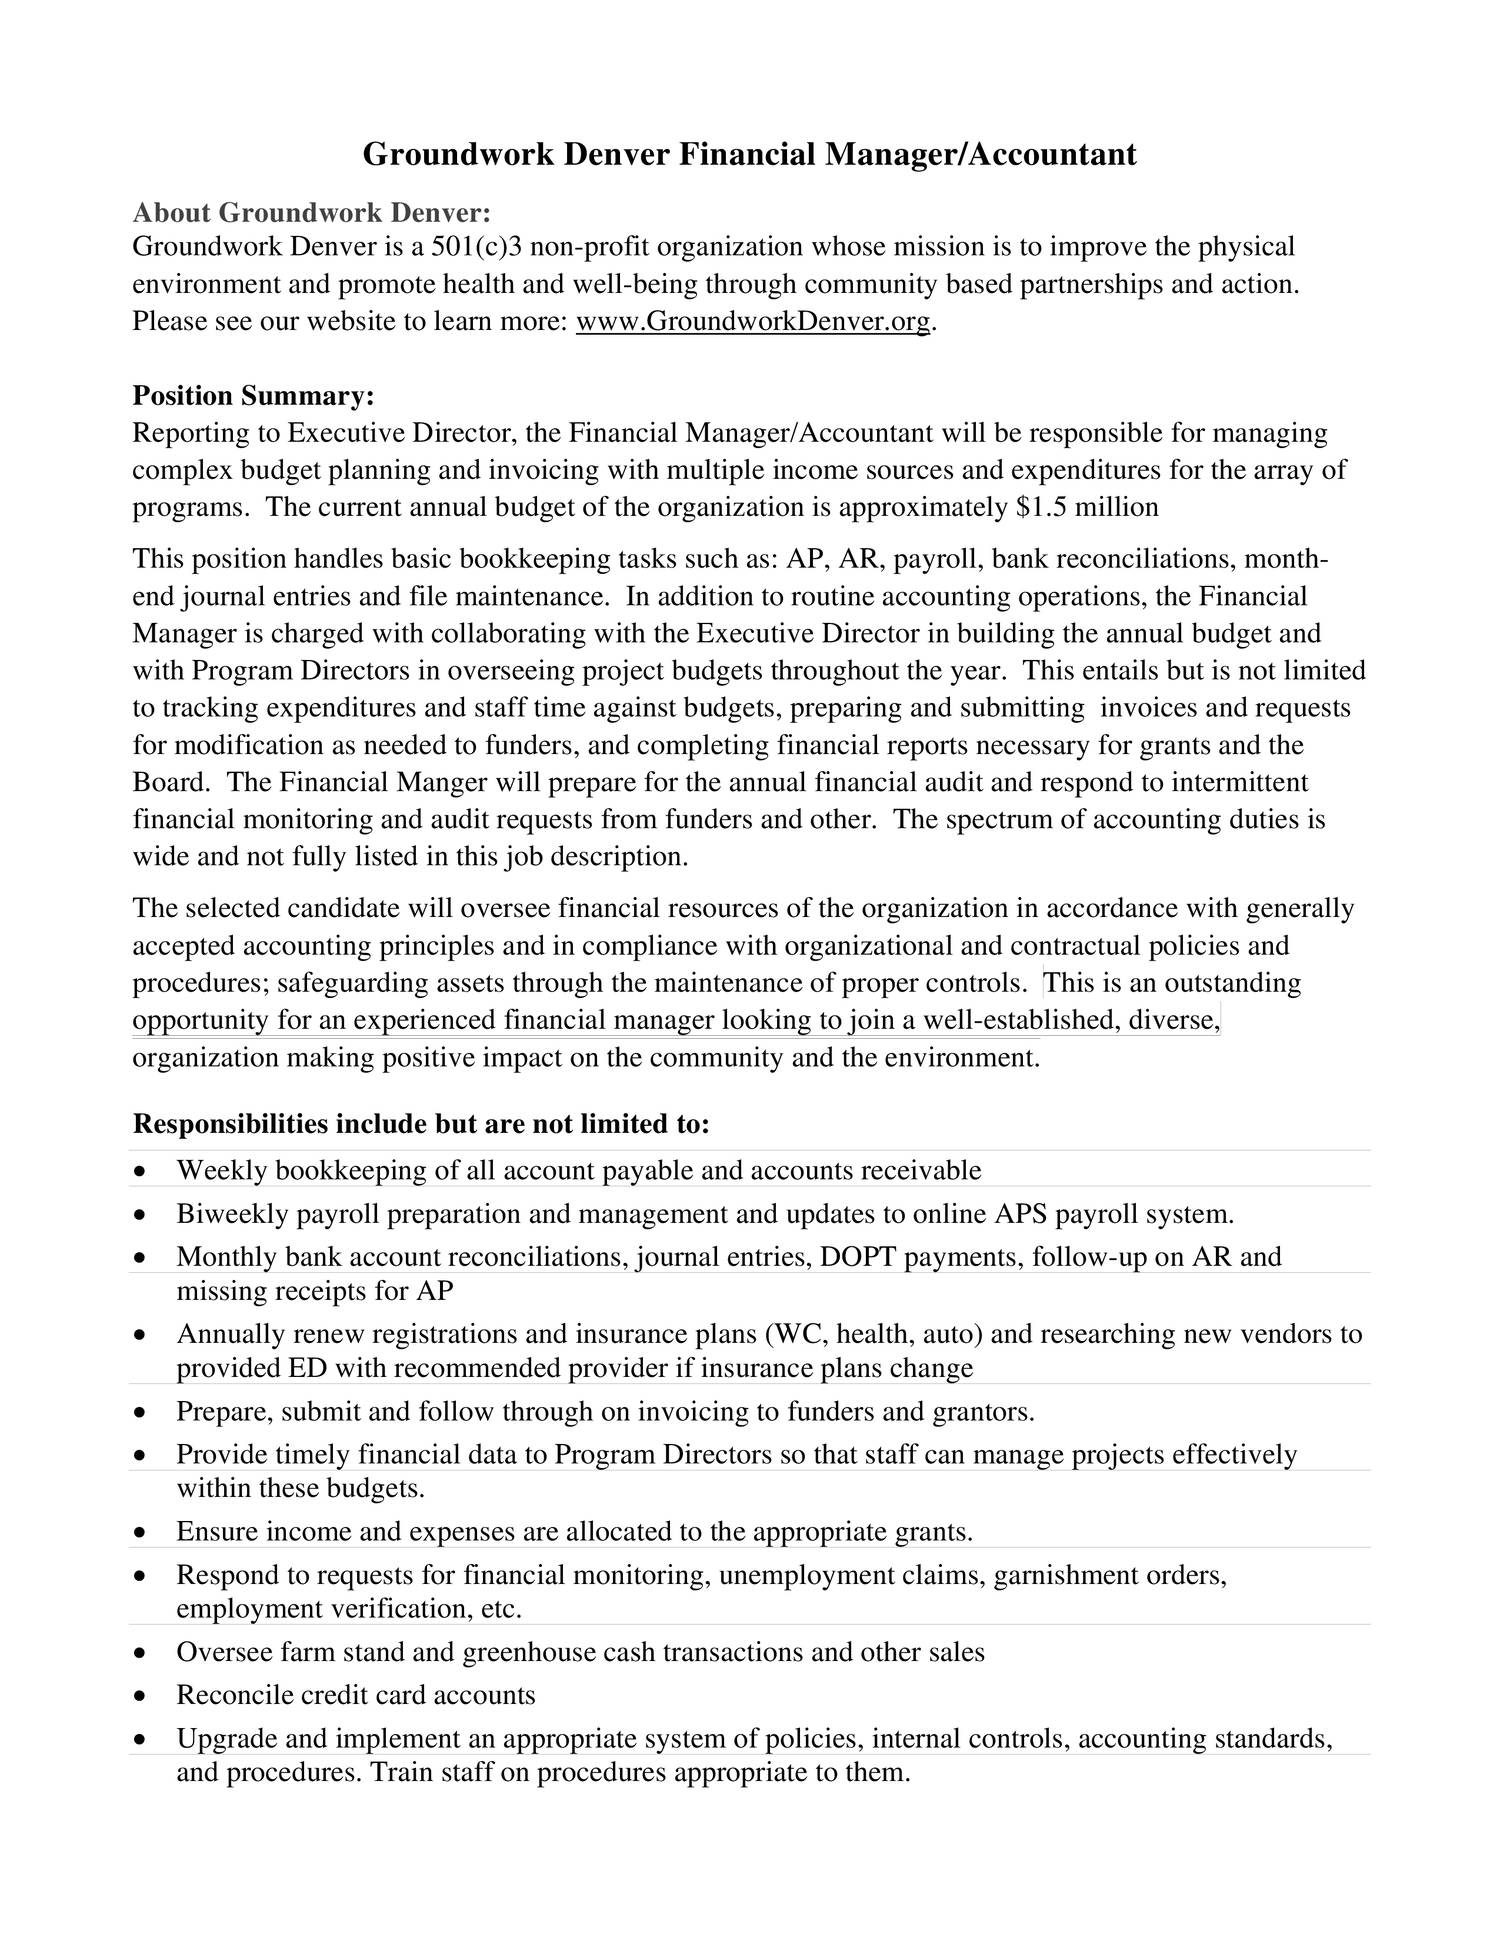 Groundwork Denver Financial Manager Job Description.pdf   DocDroid